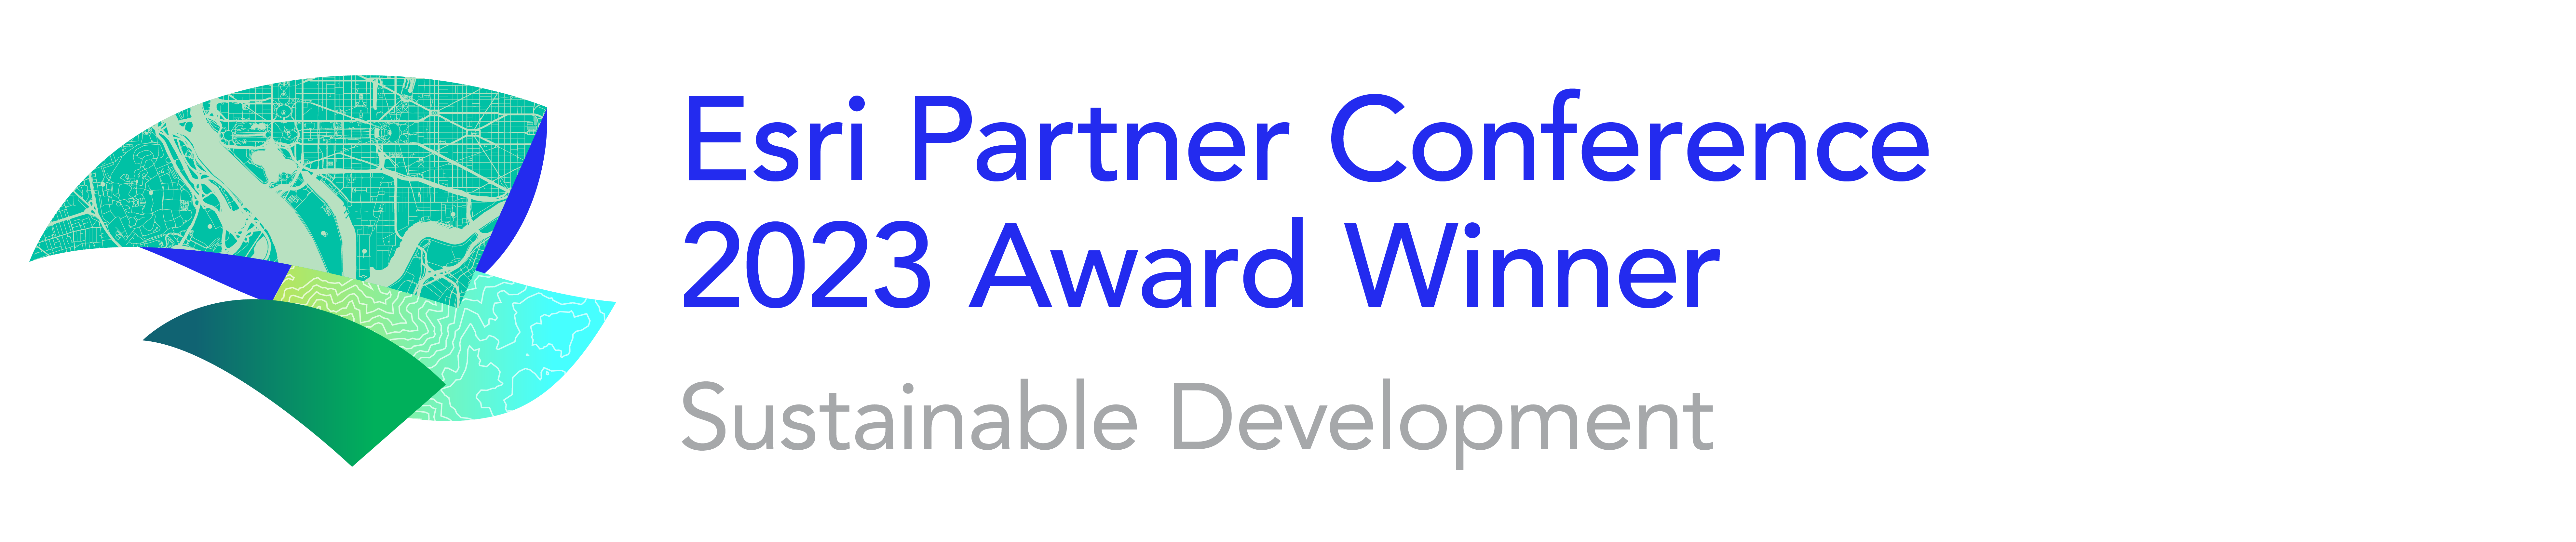 2023 EPC Award Winner Sustainable Development